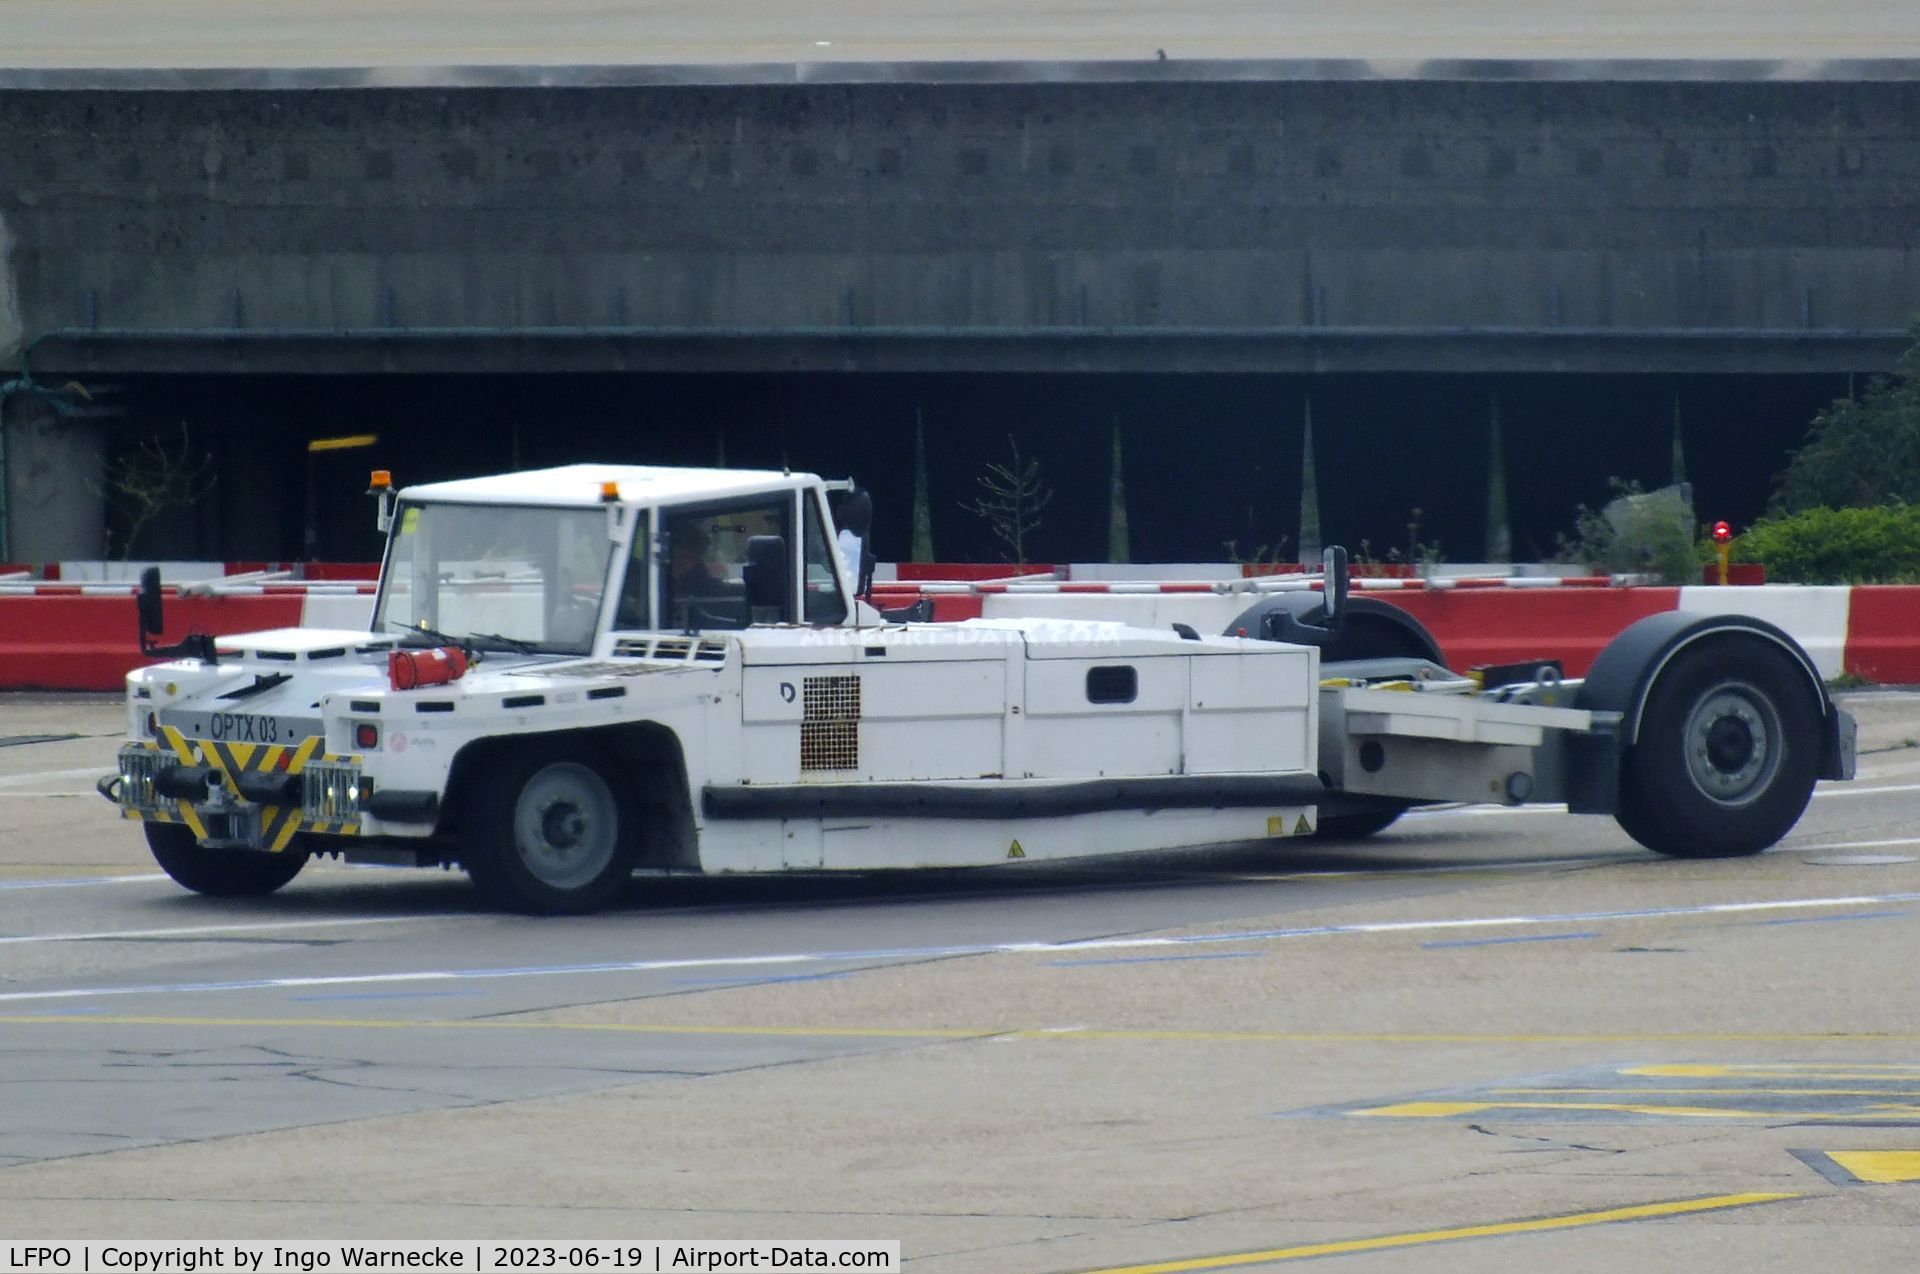 Paris Orly Airport, Orly (near Paris) France (LFPO) - pushback tug at Paris/Orly airport